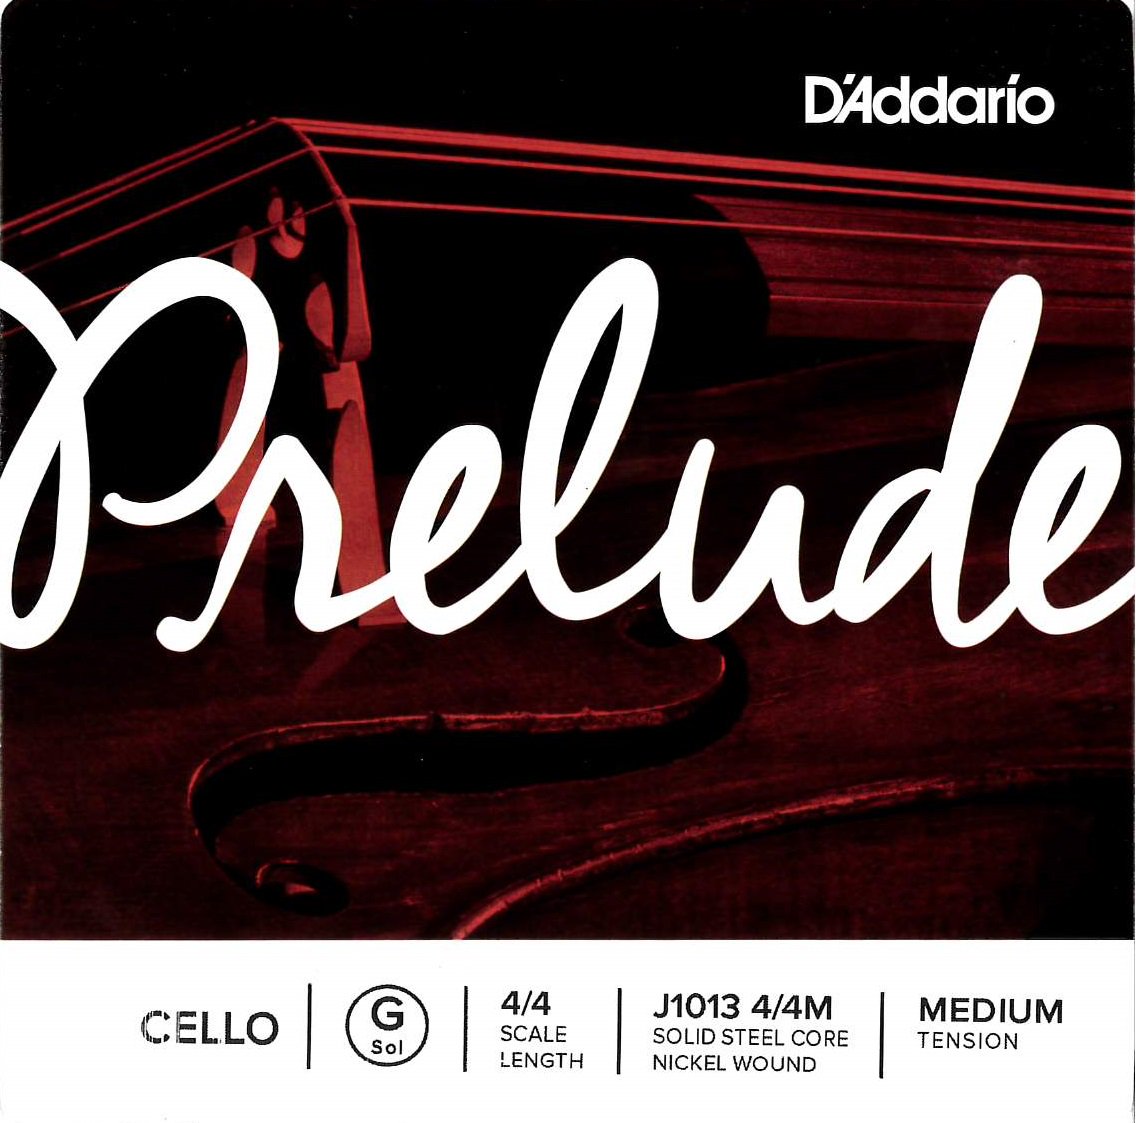 【Prelude】ﾌﾟﾚﾘｭｰﾄﾞ-D'addario- - I Love Strings. | 国内最大級クラシック弦の通販